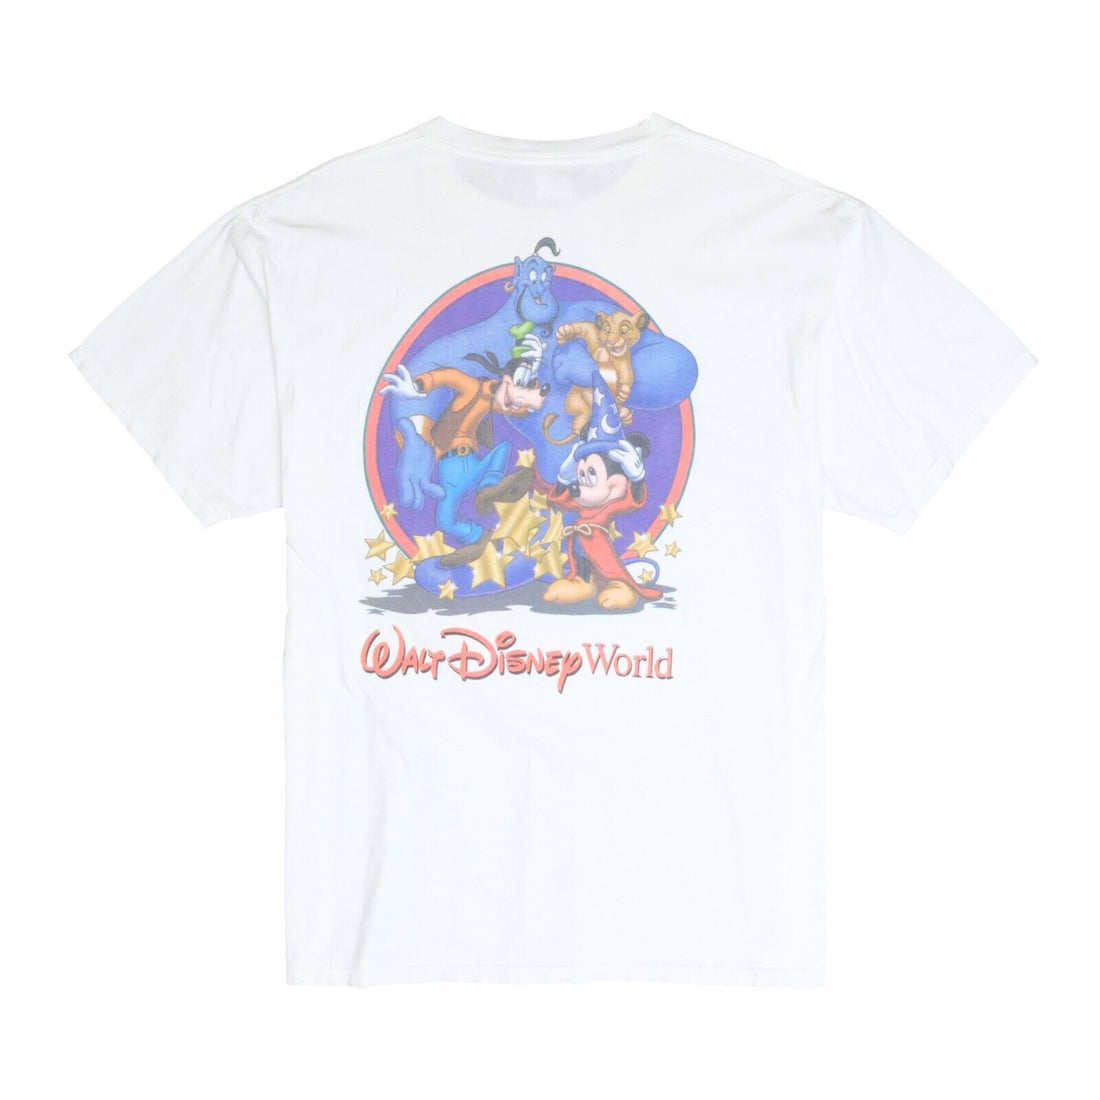 Vintage Walt Disney World 25th Anniversary T-Shirt Size Large Mickey Mouse